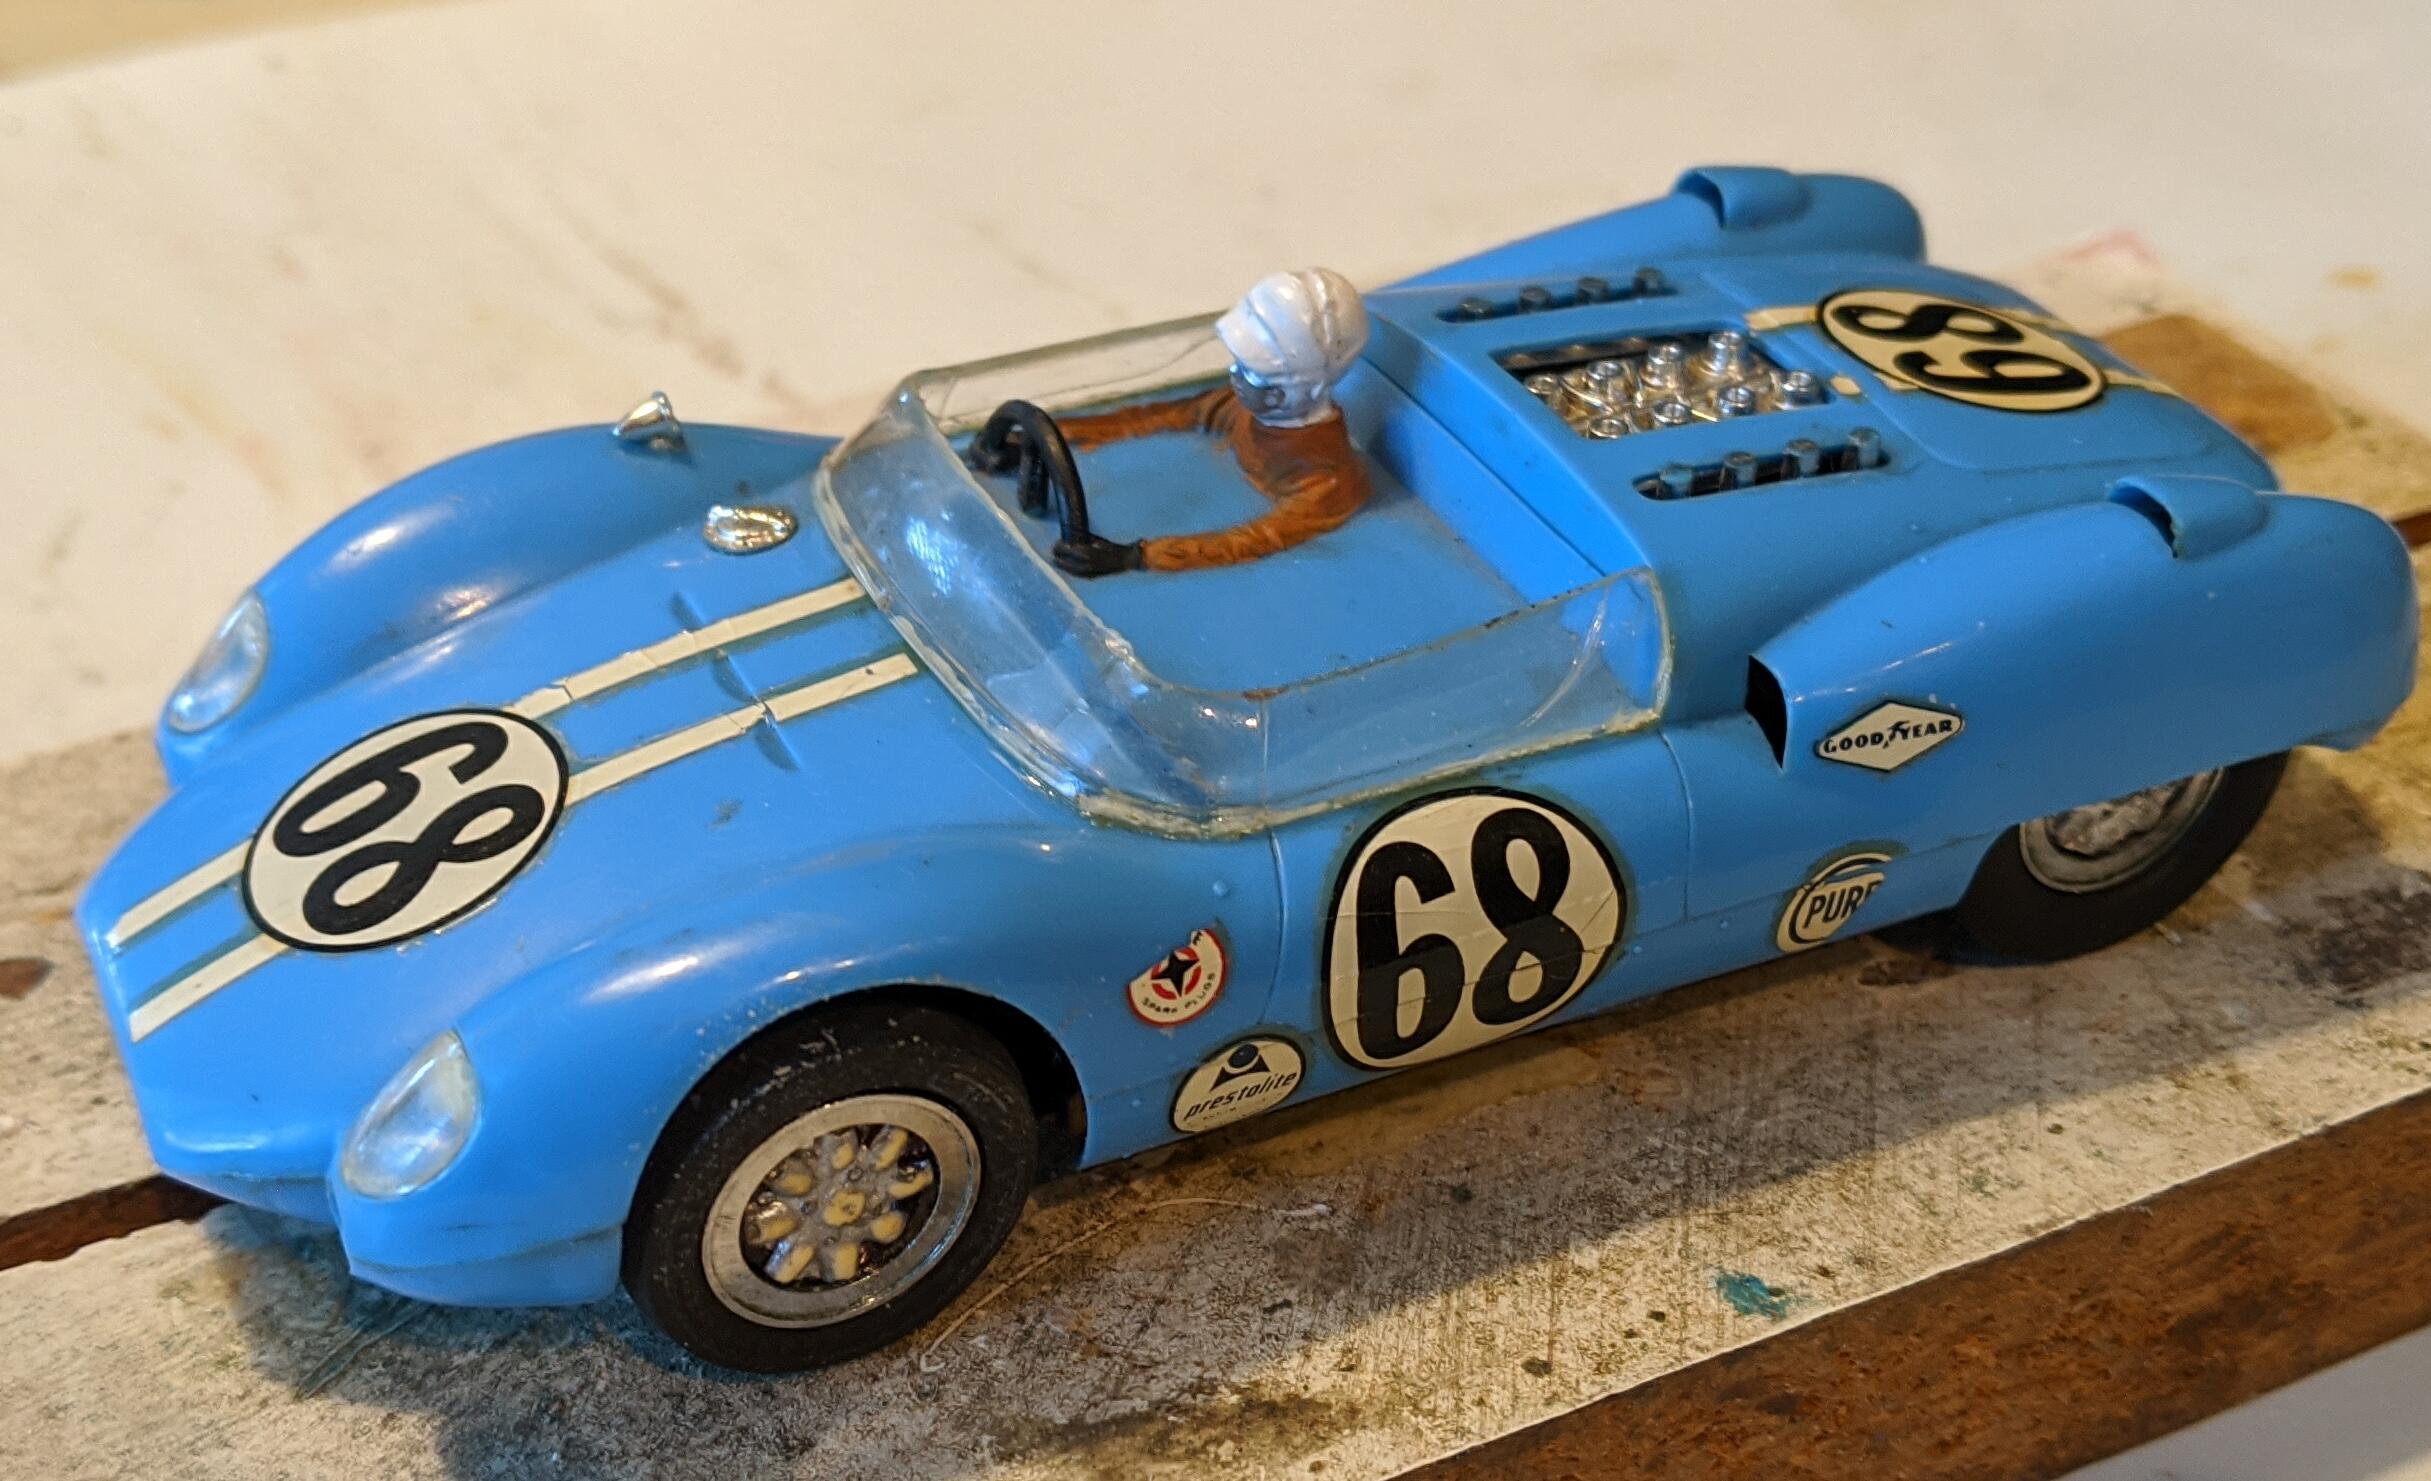 1963 Cooper Ford - Racer